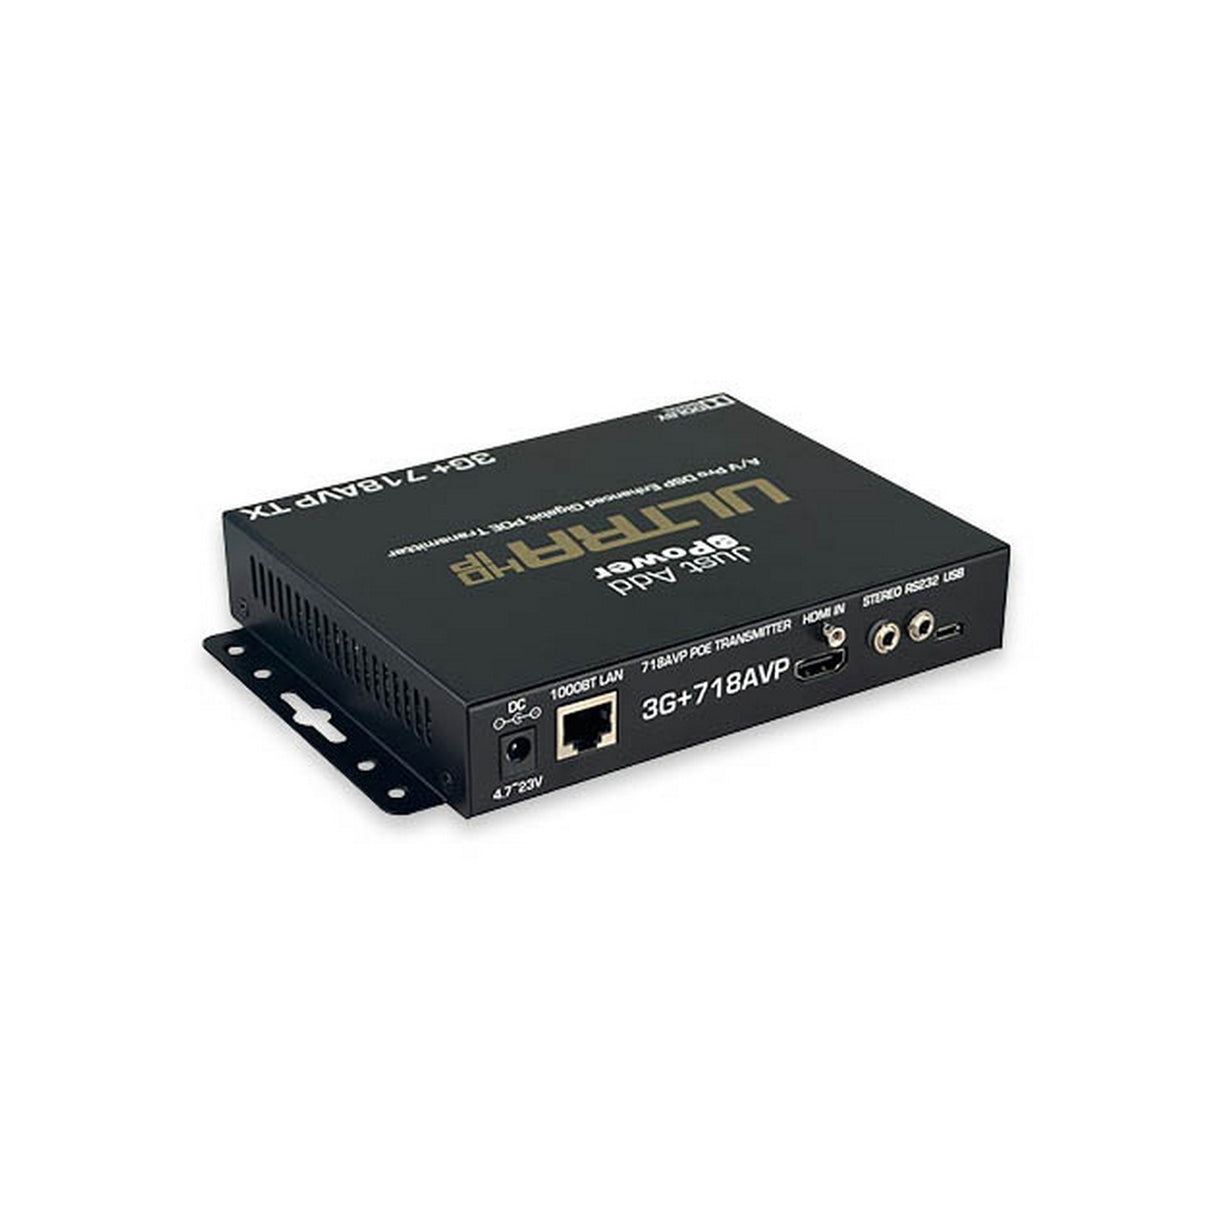 Just Add Power 3G+ ULTRA 718AVP A/V Pro DSP Enhanced UltraHDIP Gigabit Transmitter